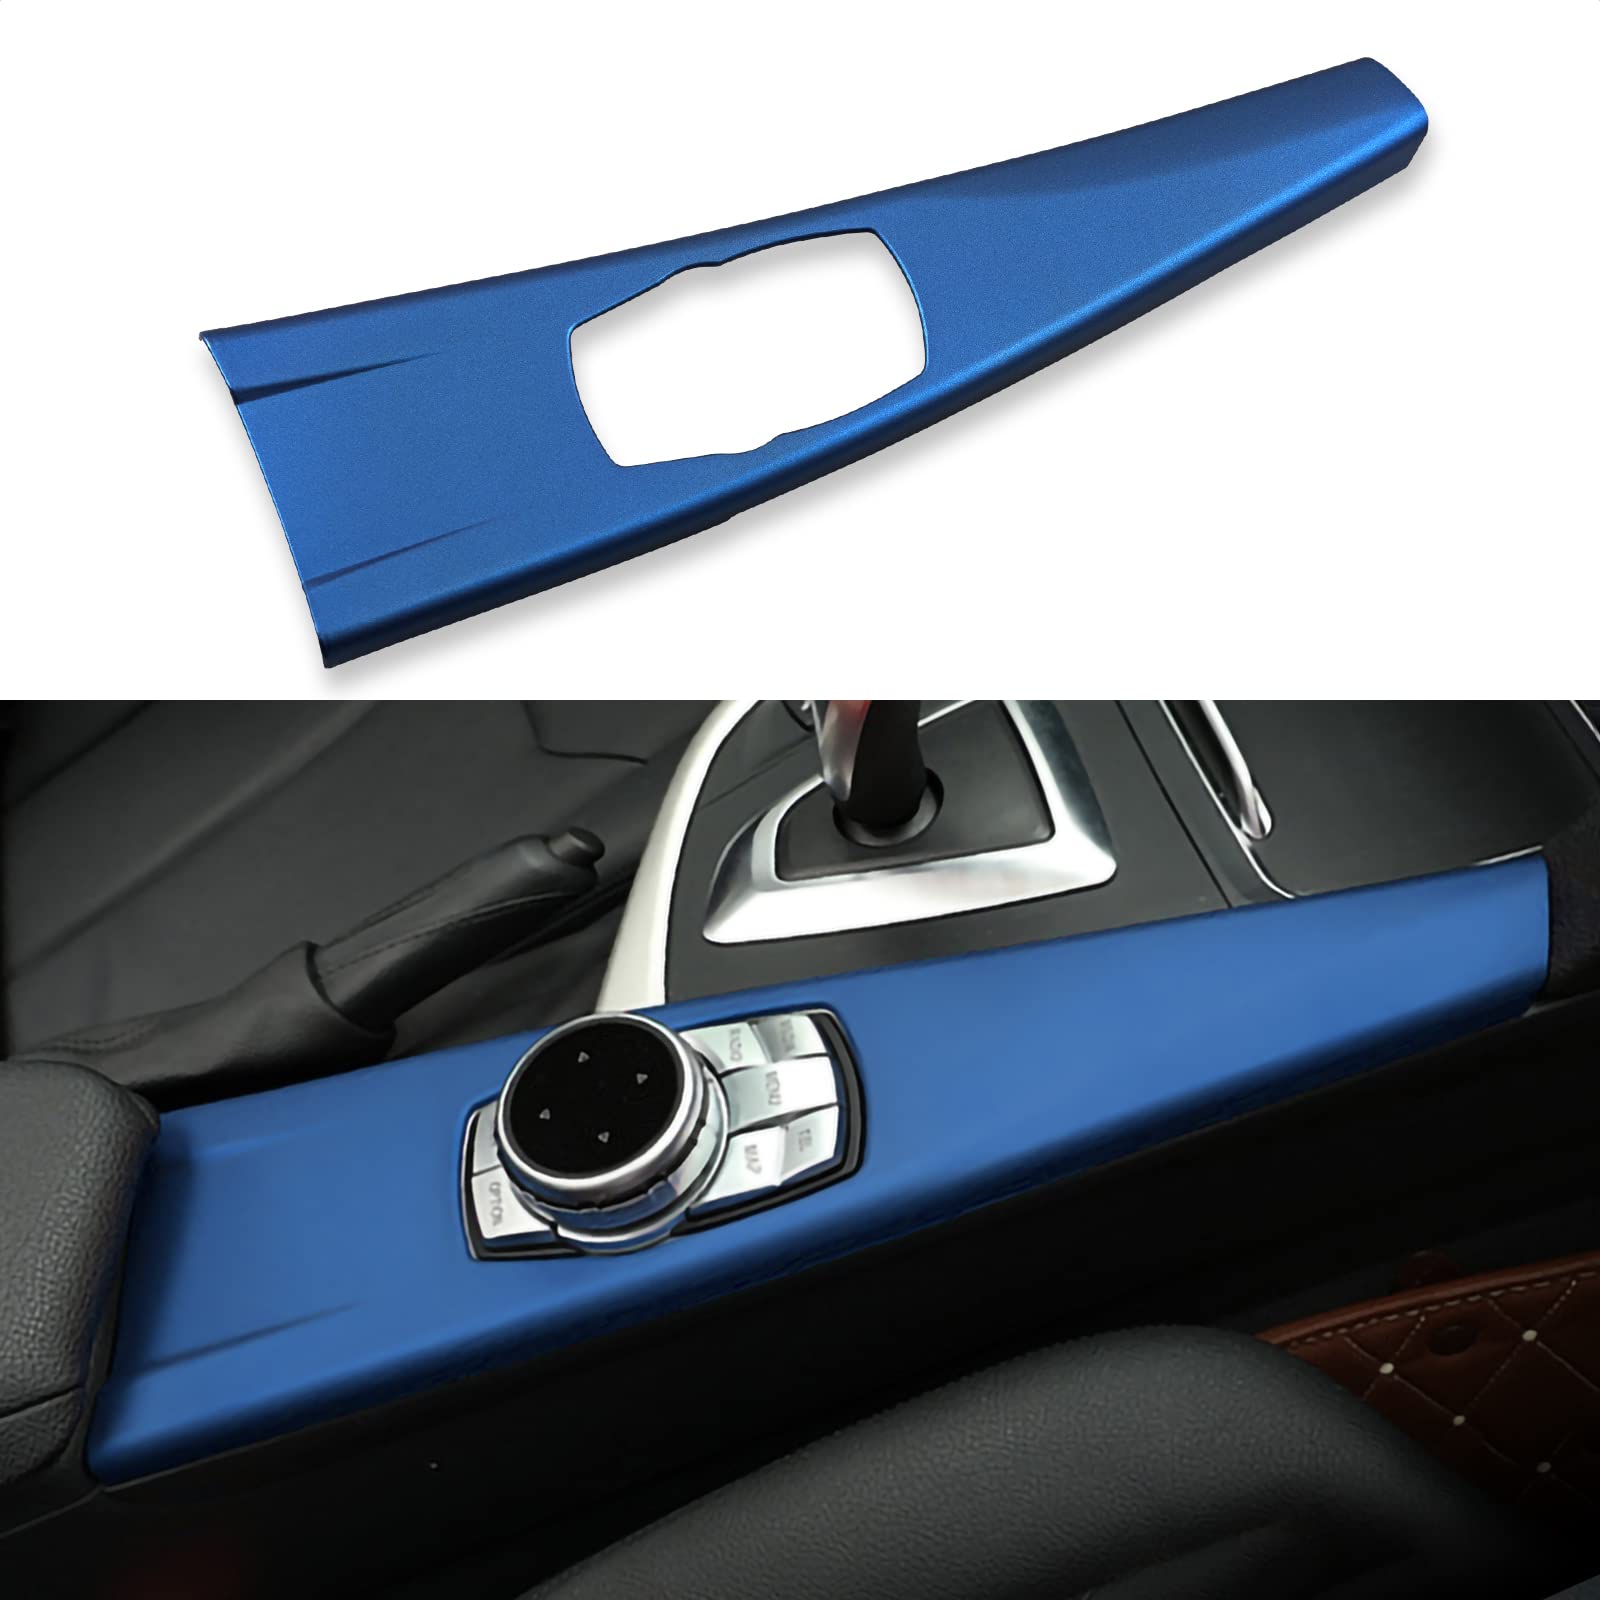 OYDDL Auto Aufkleber Multimedia Trim Panel Cover Gear Shift Abdeckung ABS Interieur kompatibel mit BMW F30 F31 F32 F34 F35 F36 3GT M4 Zubehör (Blau) von OYDDL